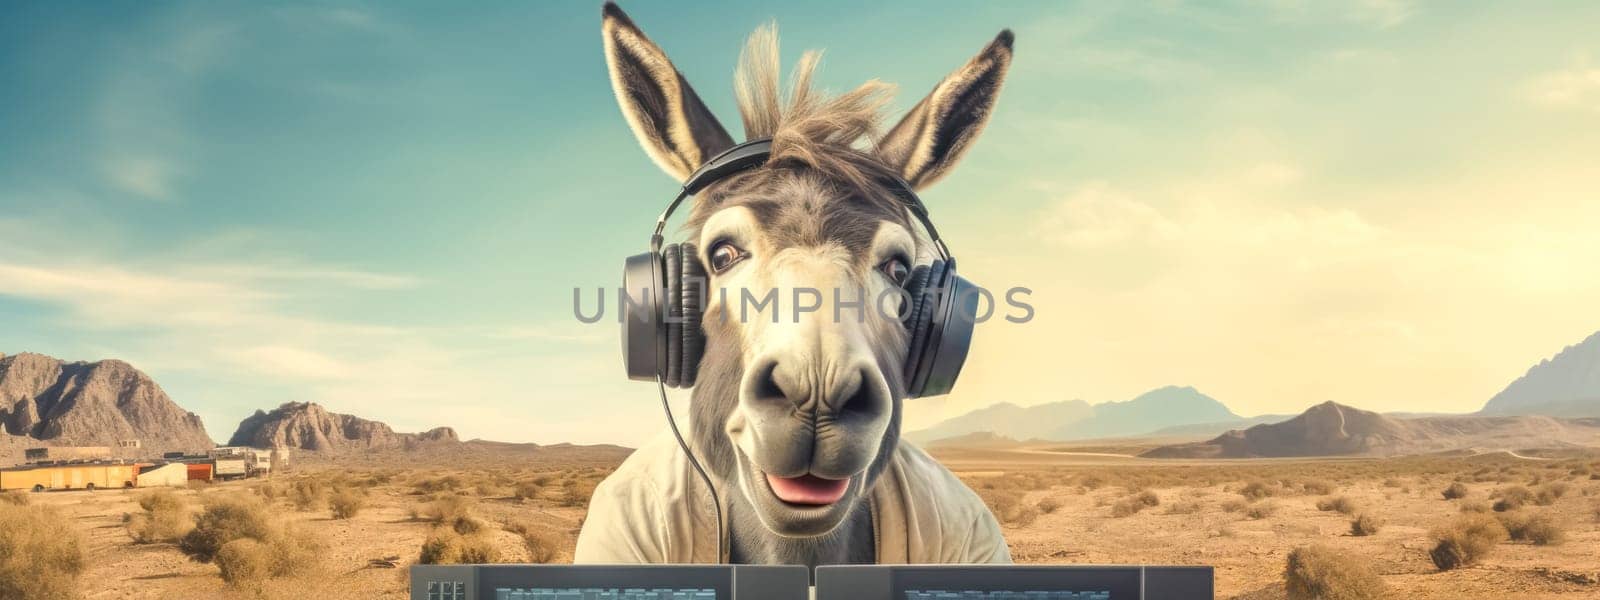 Cartoon donkey with headphones djs in a sunny desert scene, showcasing humor and music